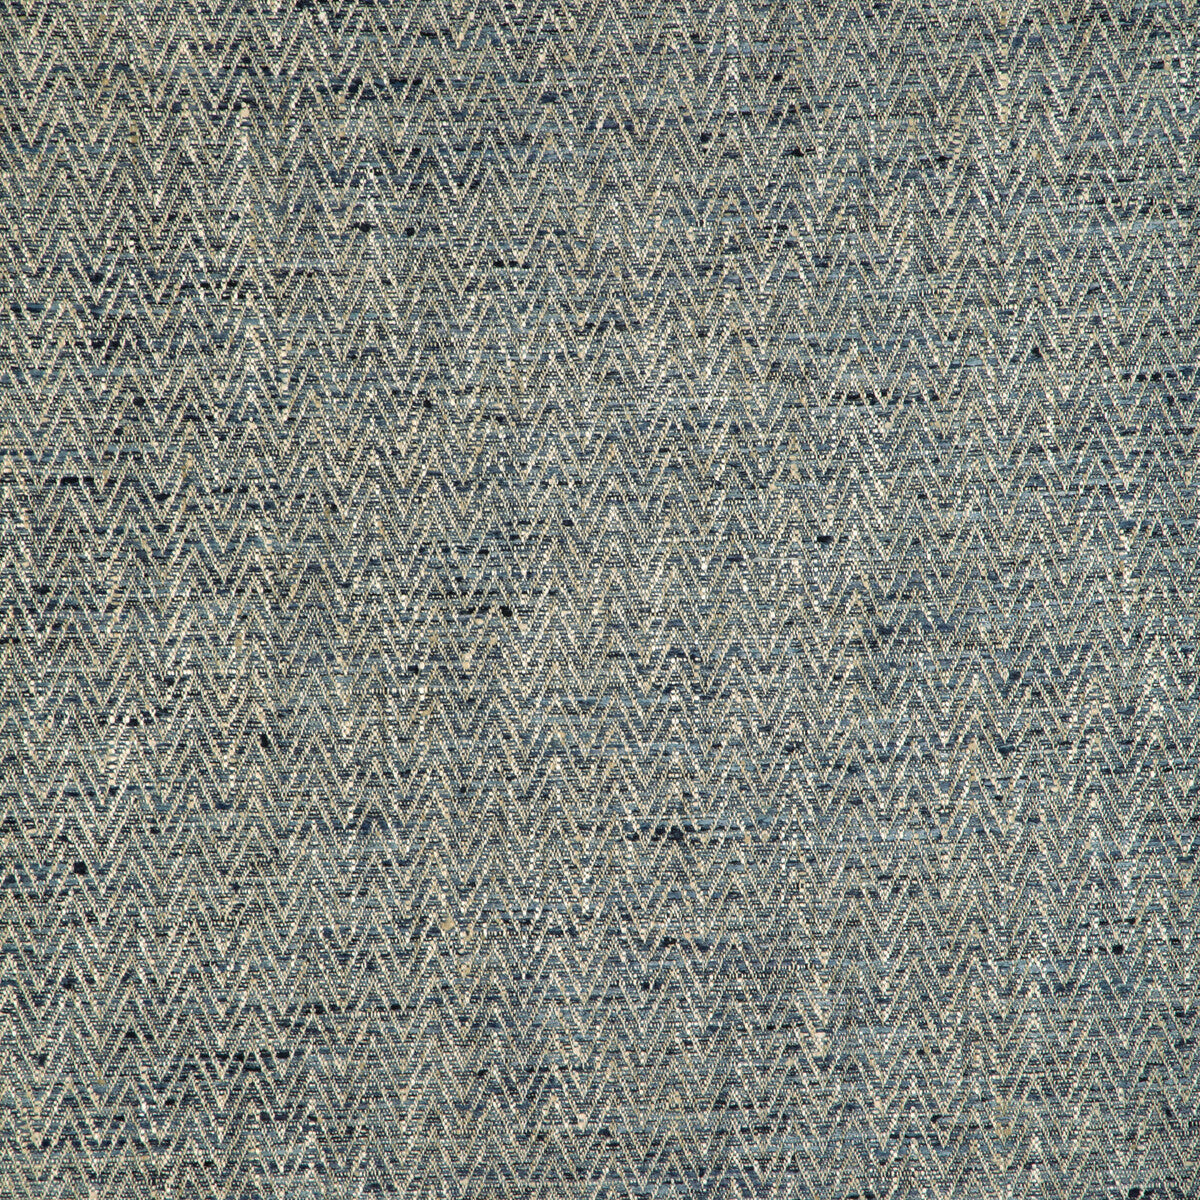 Kravet Smart fabric in 34092-516 color - pattern 34092.516.0 - by Kravet Smart